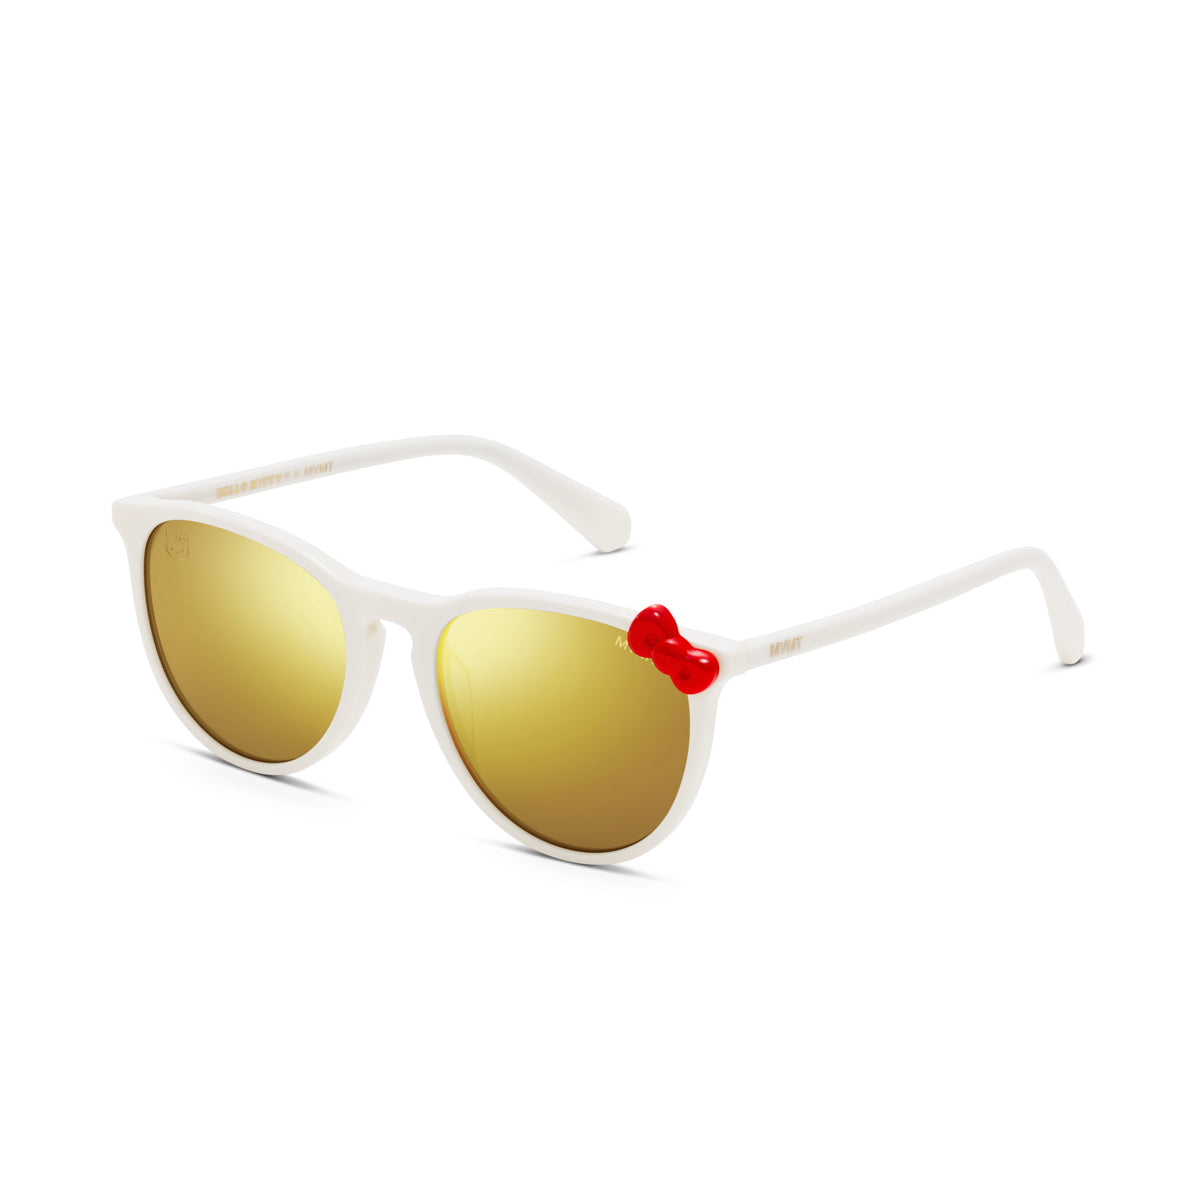 Hello Kitty x MVMT Ingram Sunglasses (Glossy White) Accessory Movado Group (MVMT)   